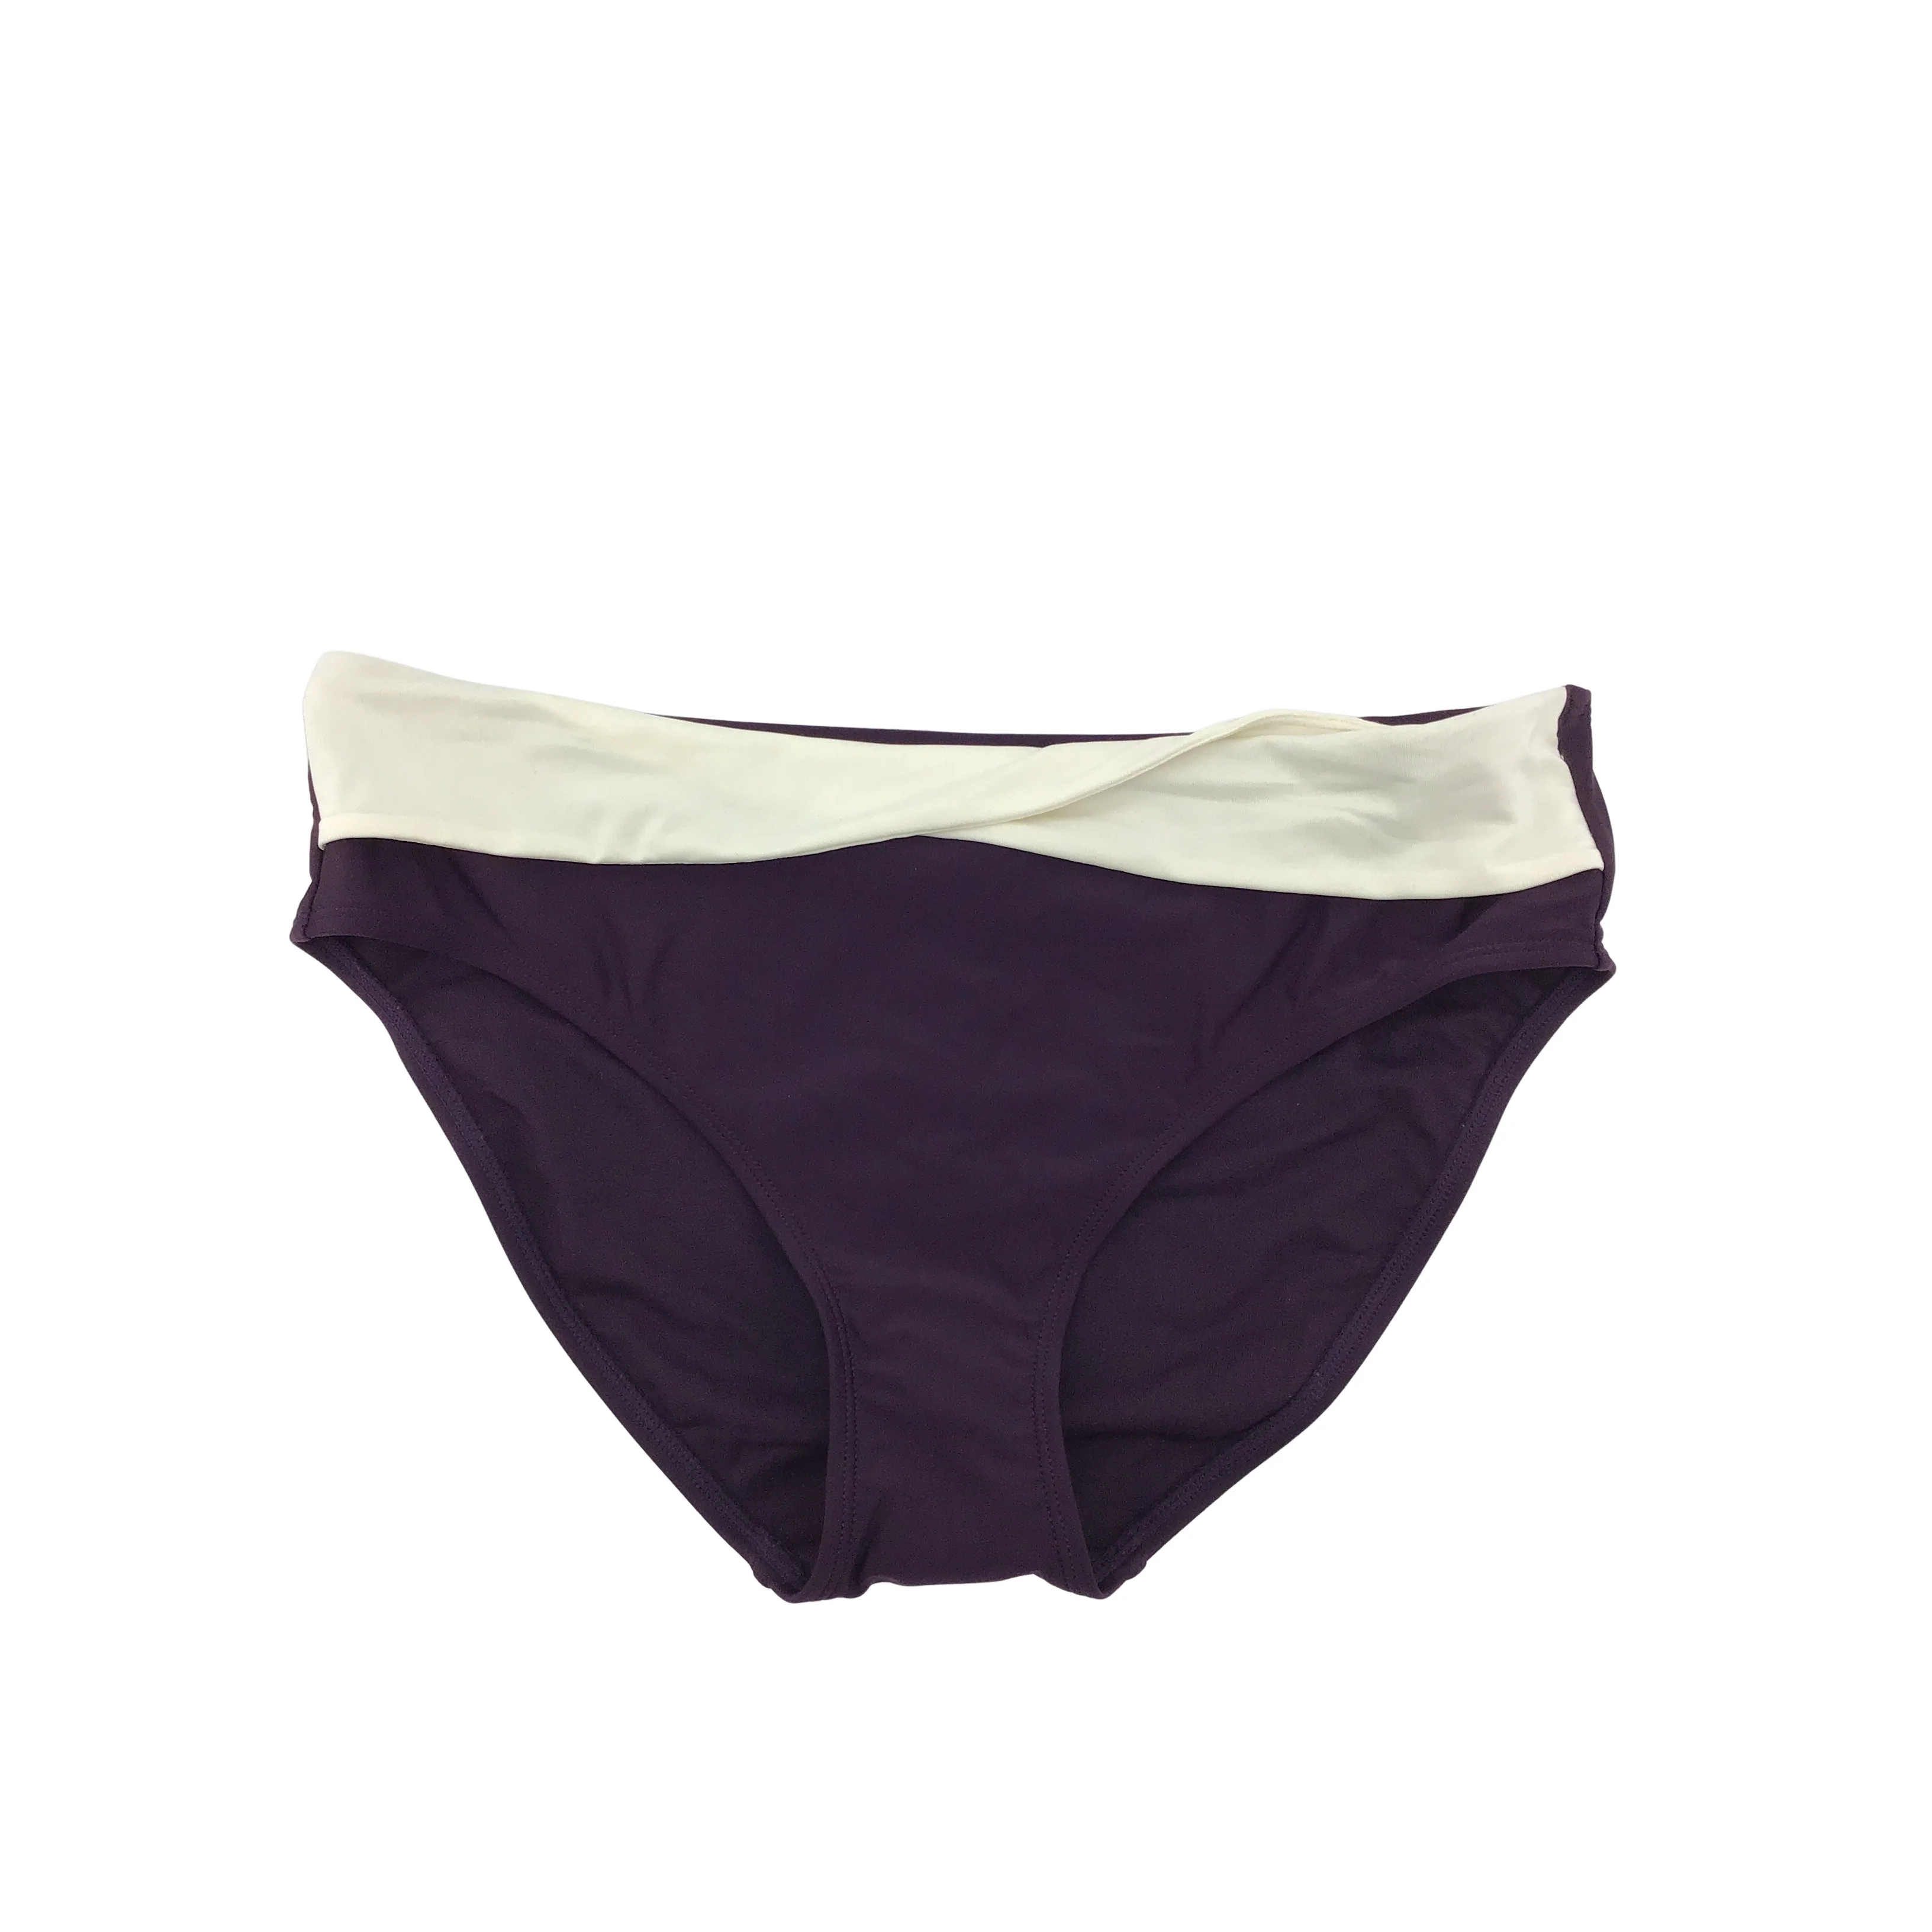 Panache Women's Bathing suit: Bottoms/ Purple/ white / Medium